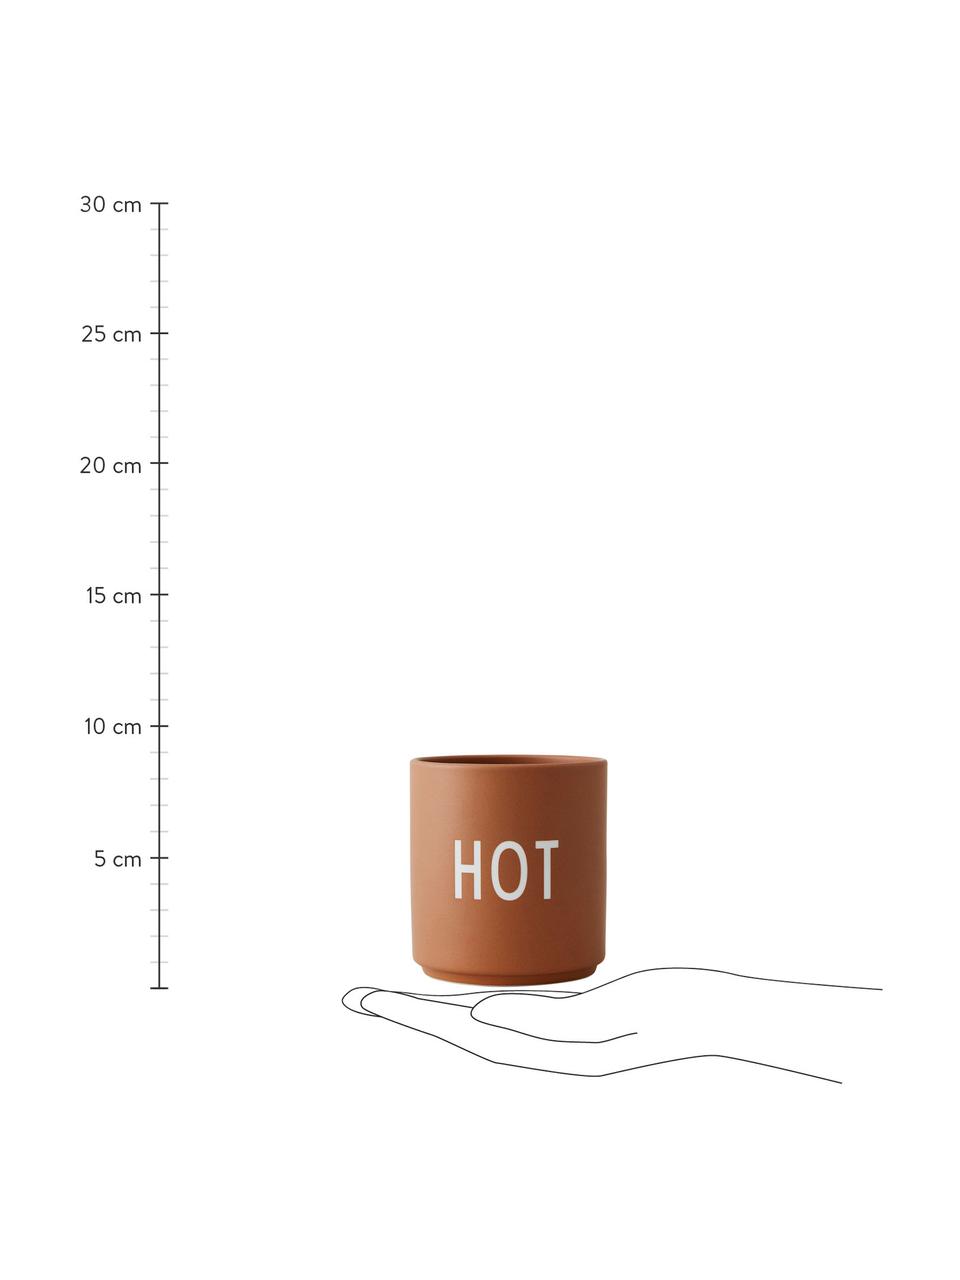 Mug design en porcelaine Favourite HOT, Couleur caramel